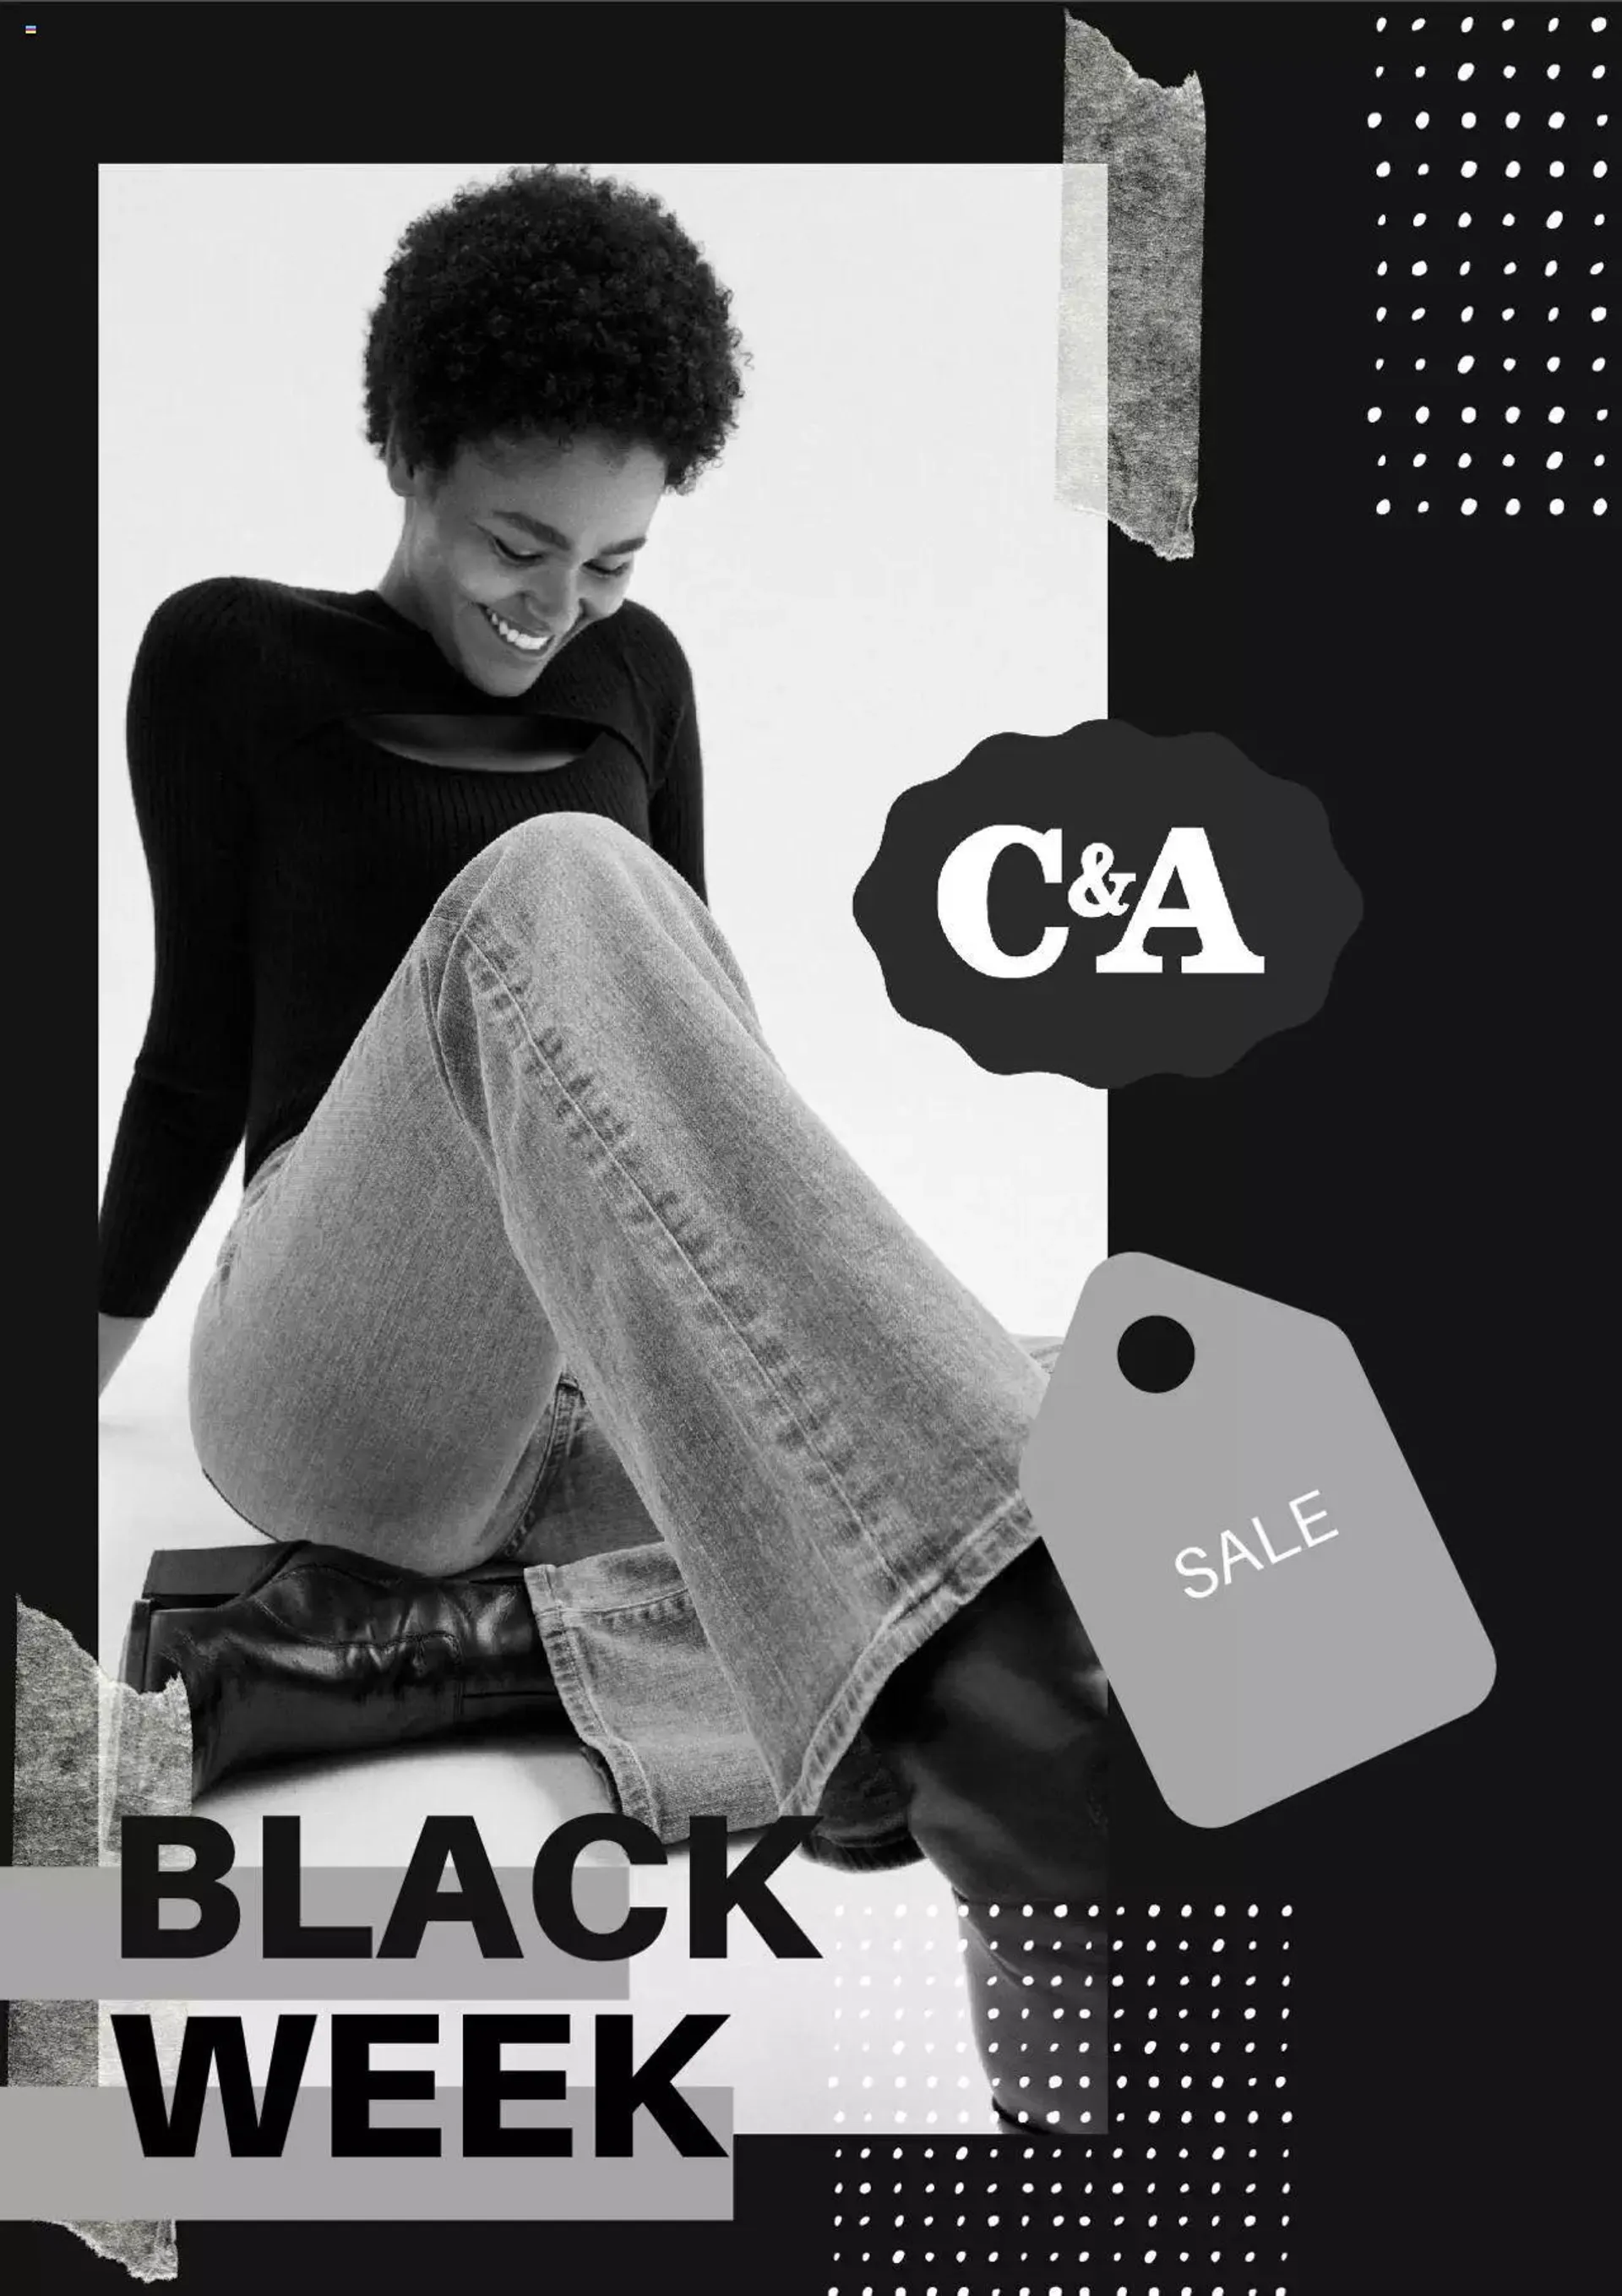 C&A - Black week information - 0